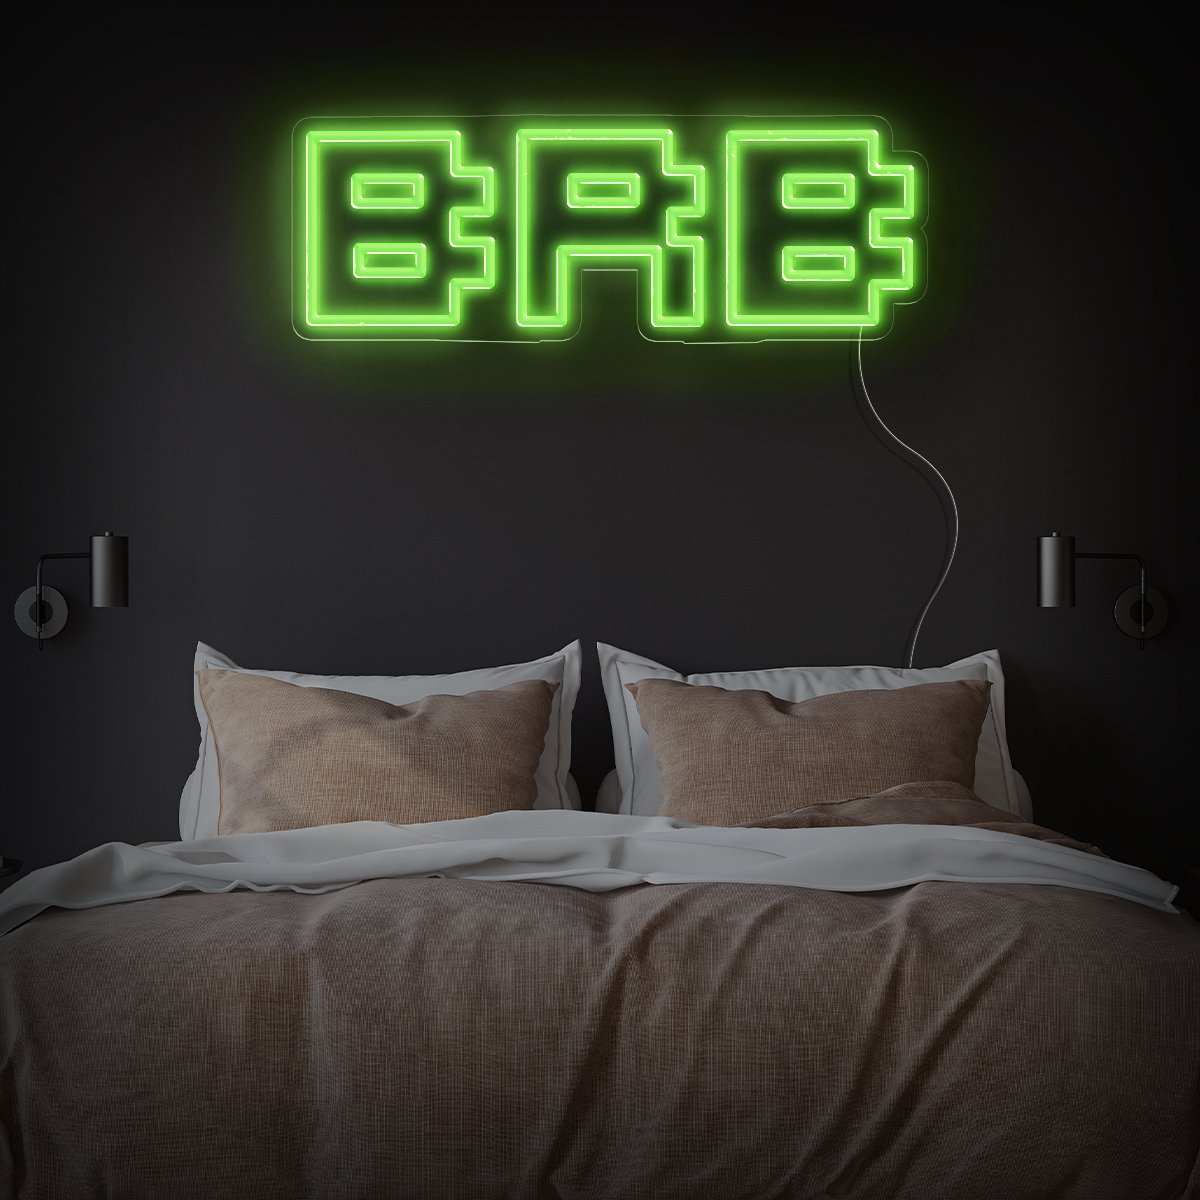 BRB Led Neon Sign For Gamers - Reels Custom